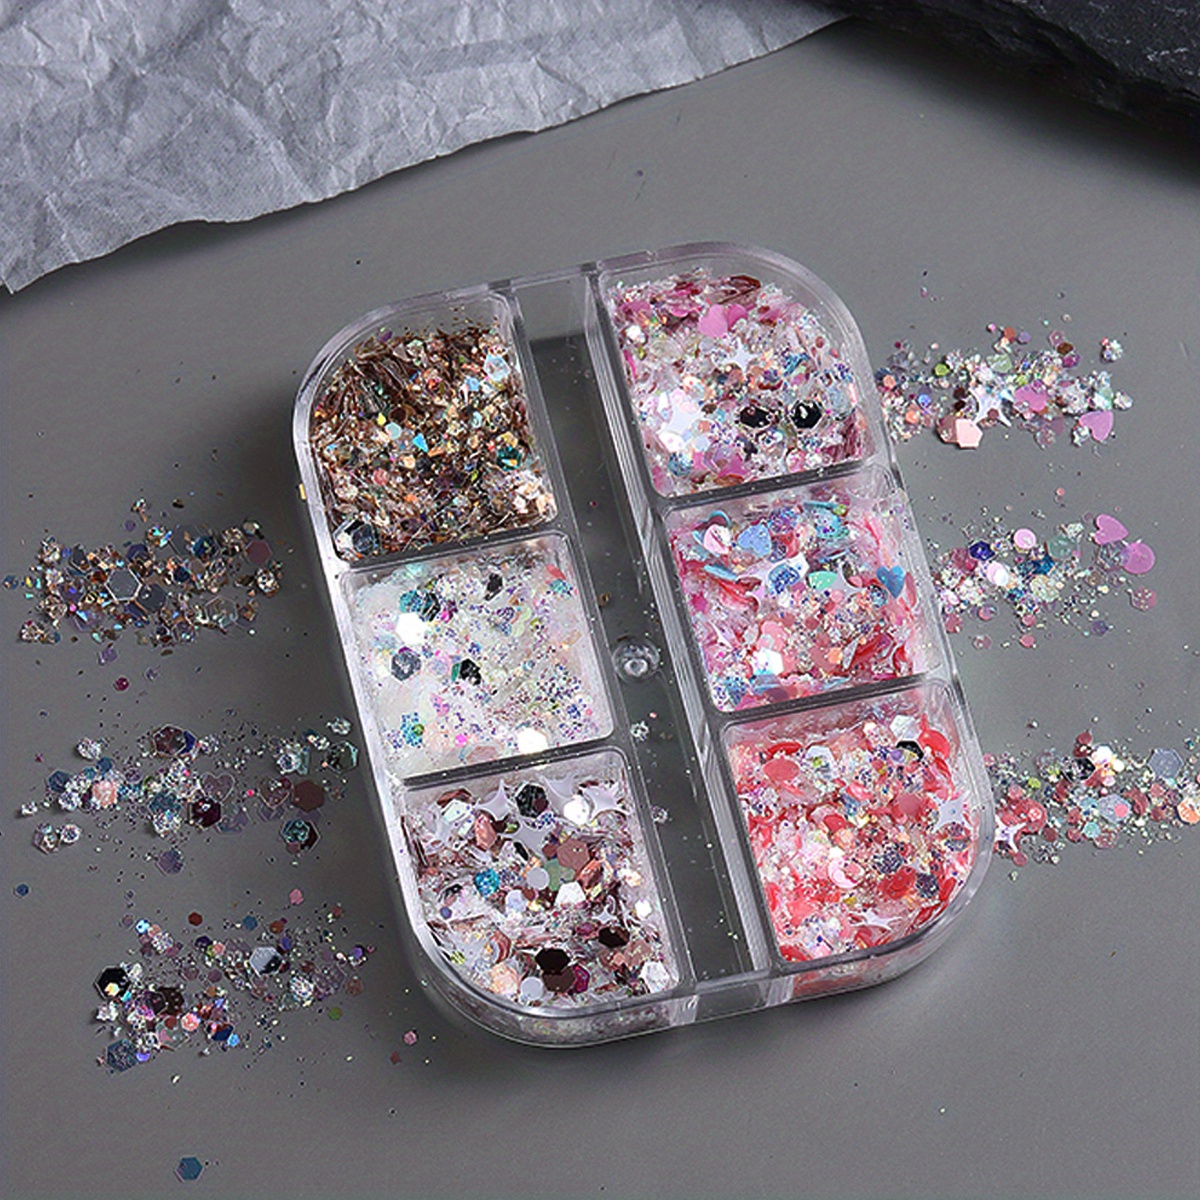 Holographic Nail Glitter – World of Glitter